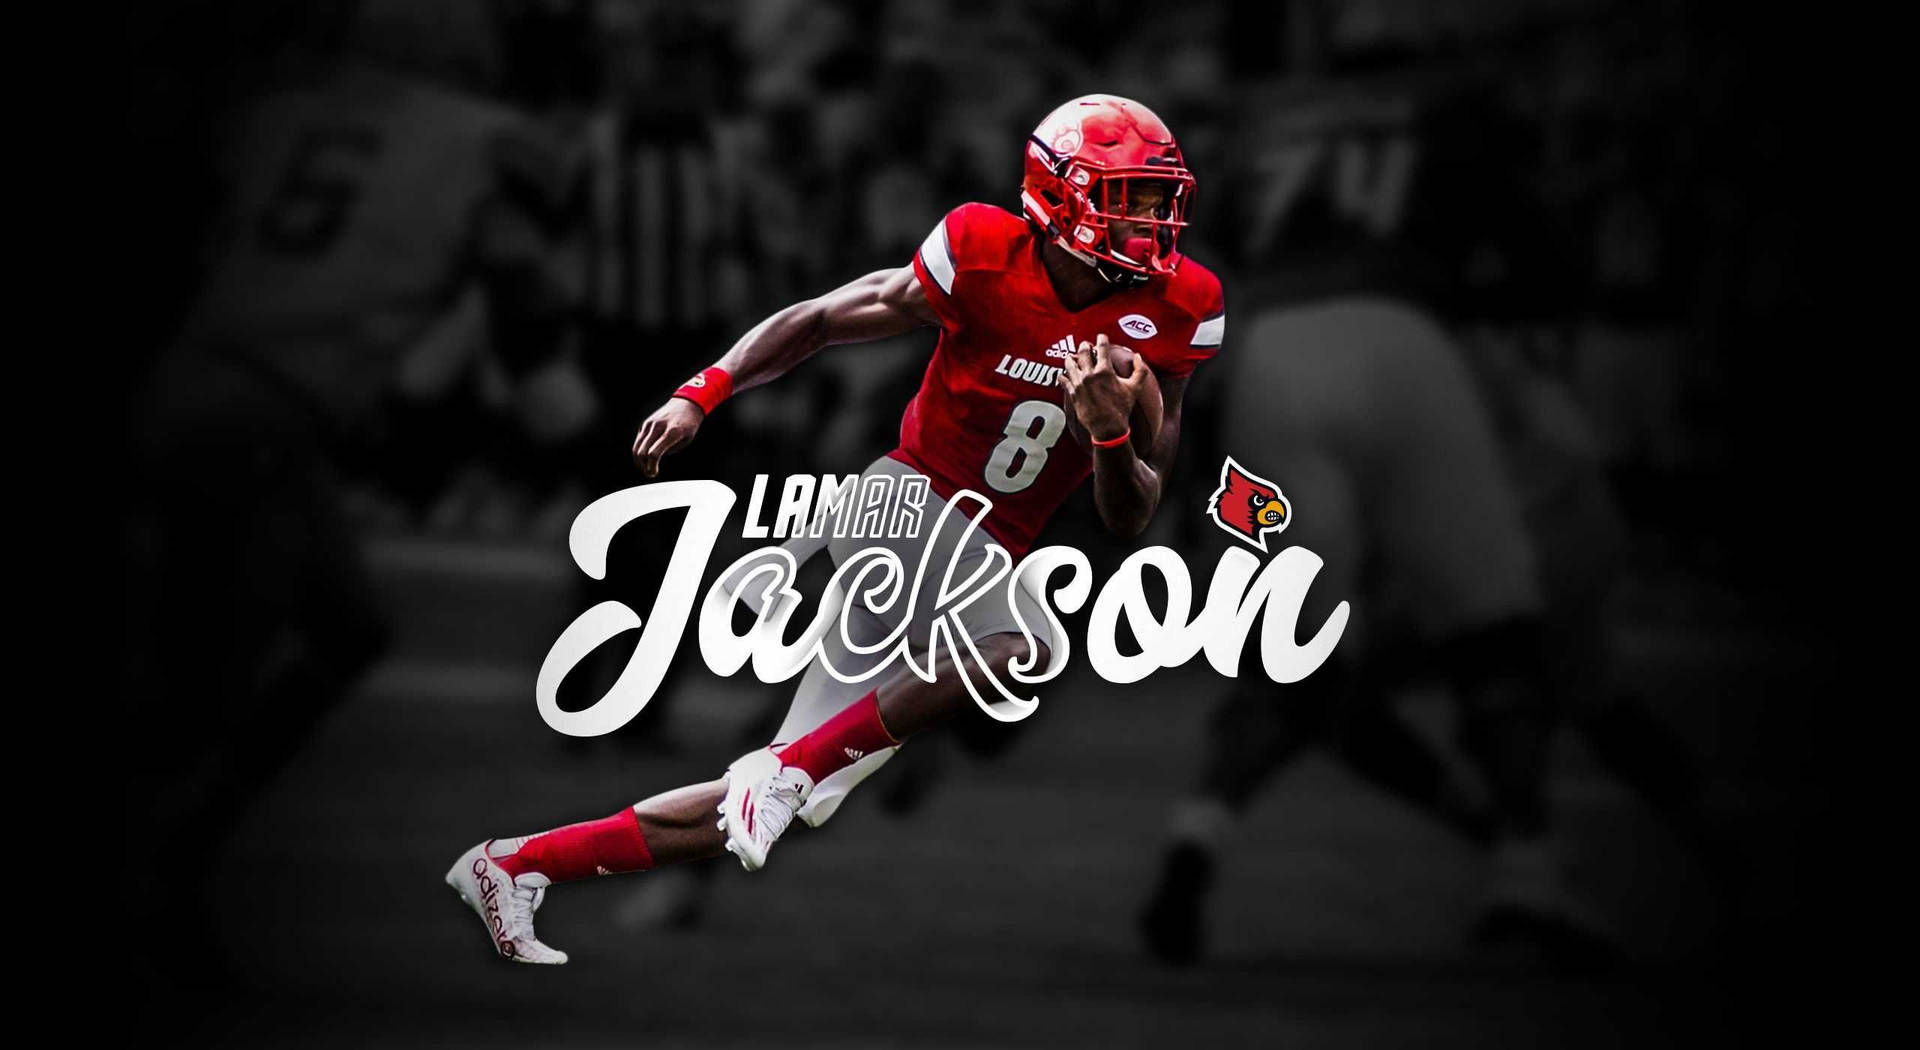 Lamar Jackson Running With Cradled Ball